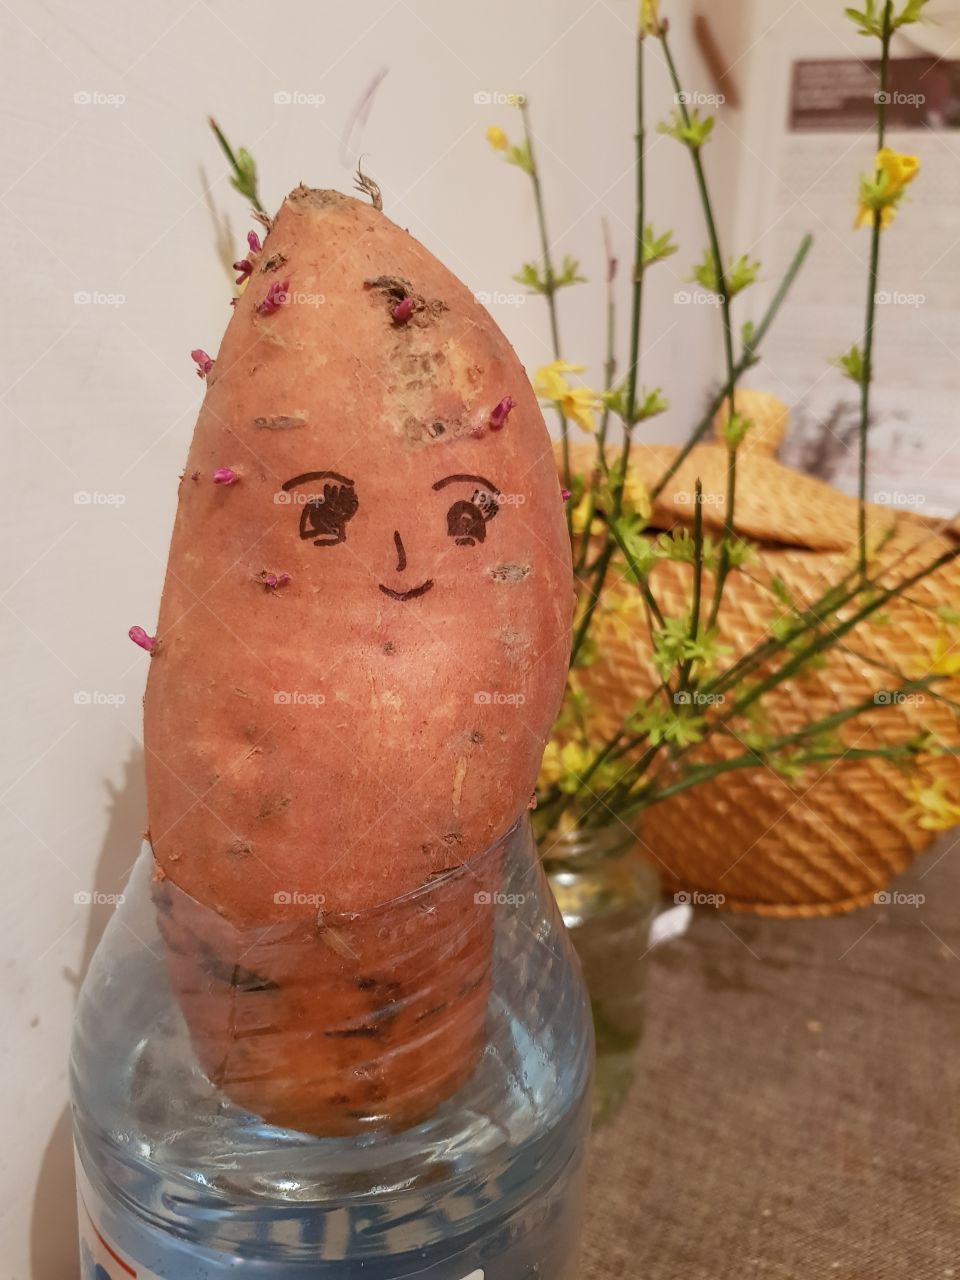 sweet potato.